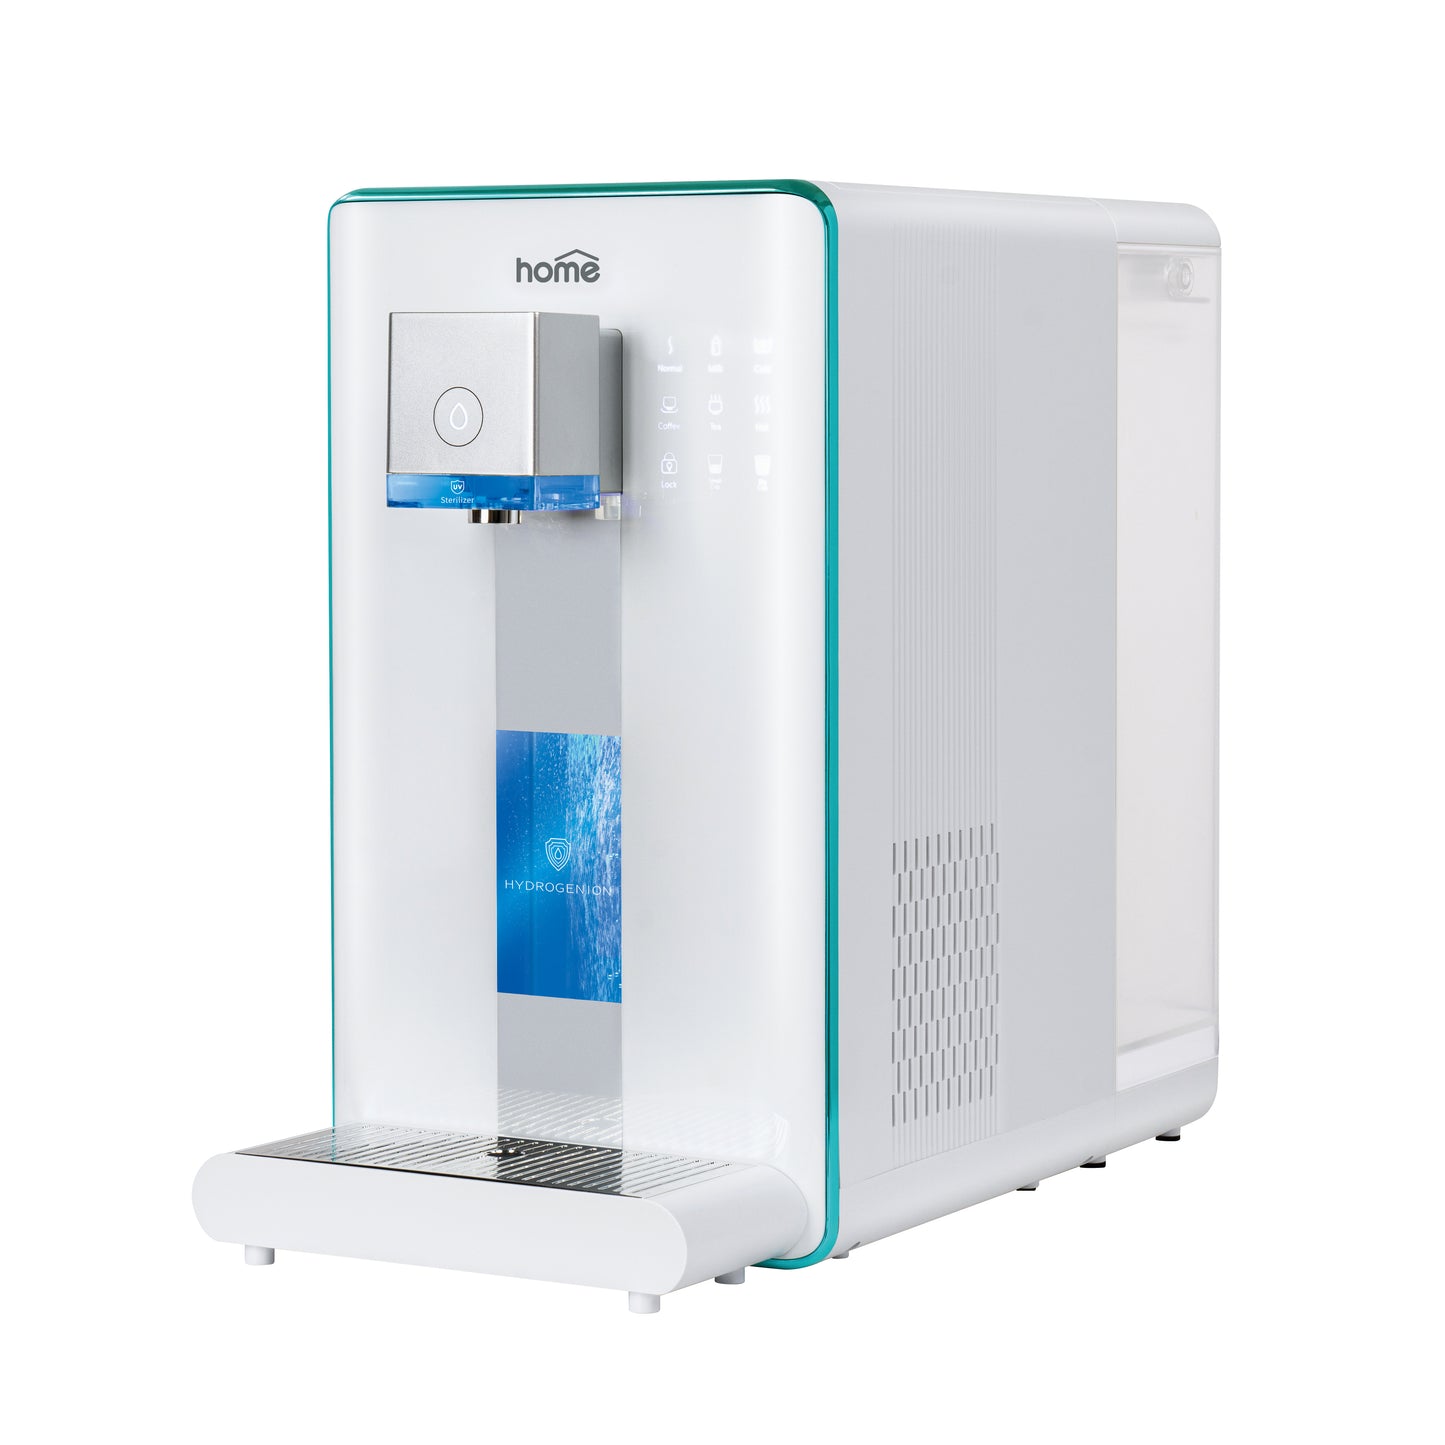 (Top Selling) DM Home RO Water Dispenser